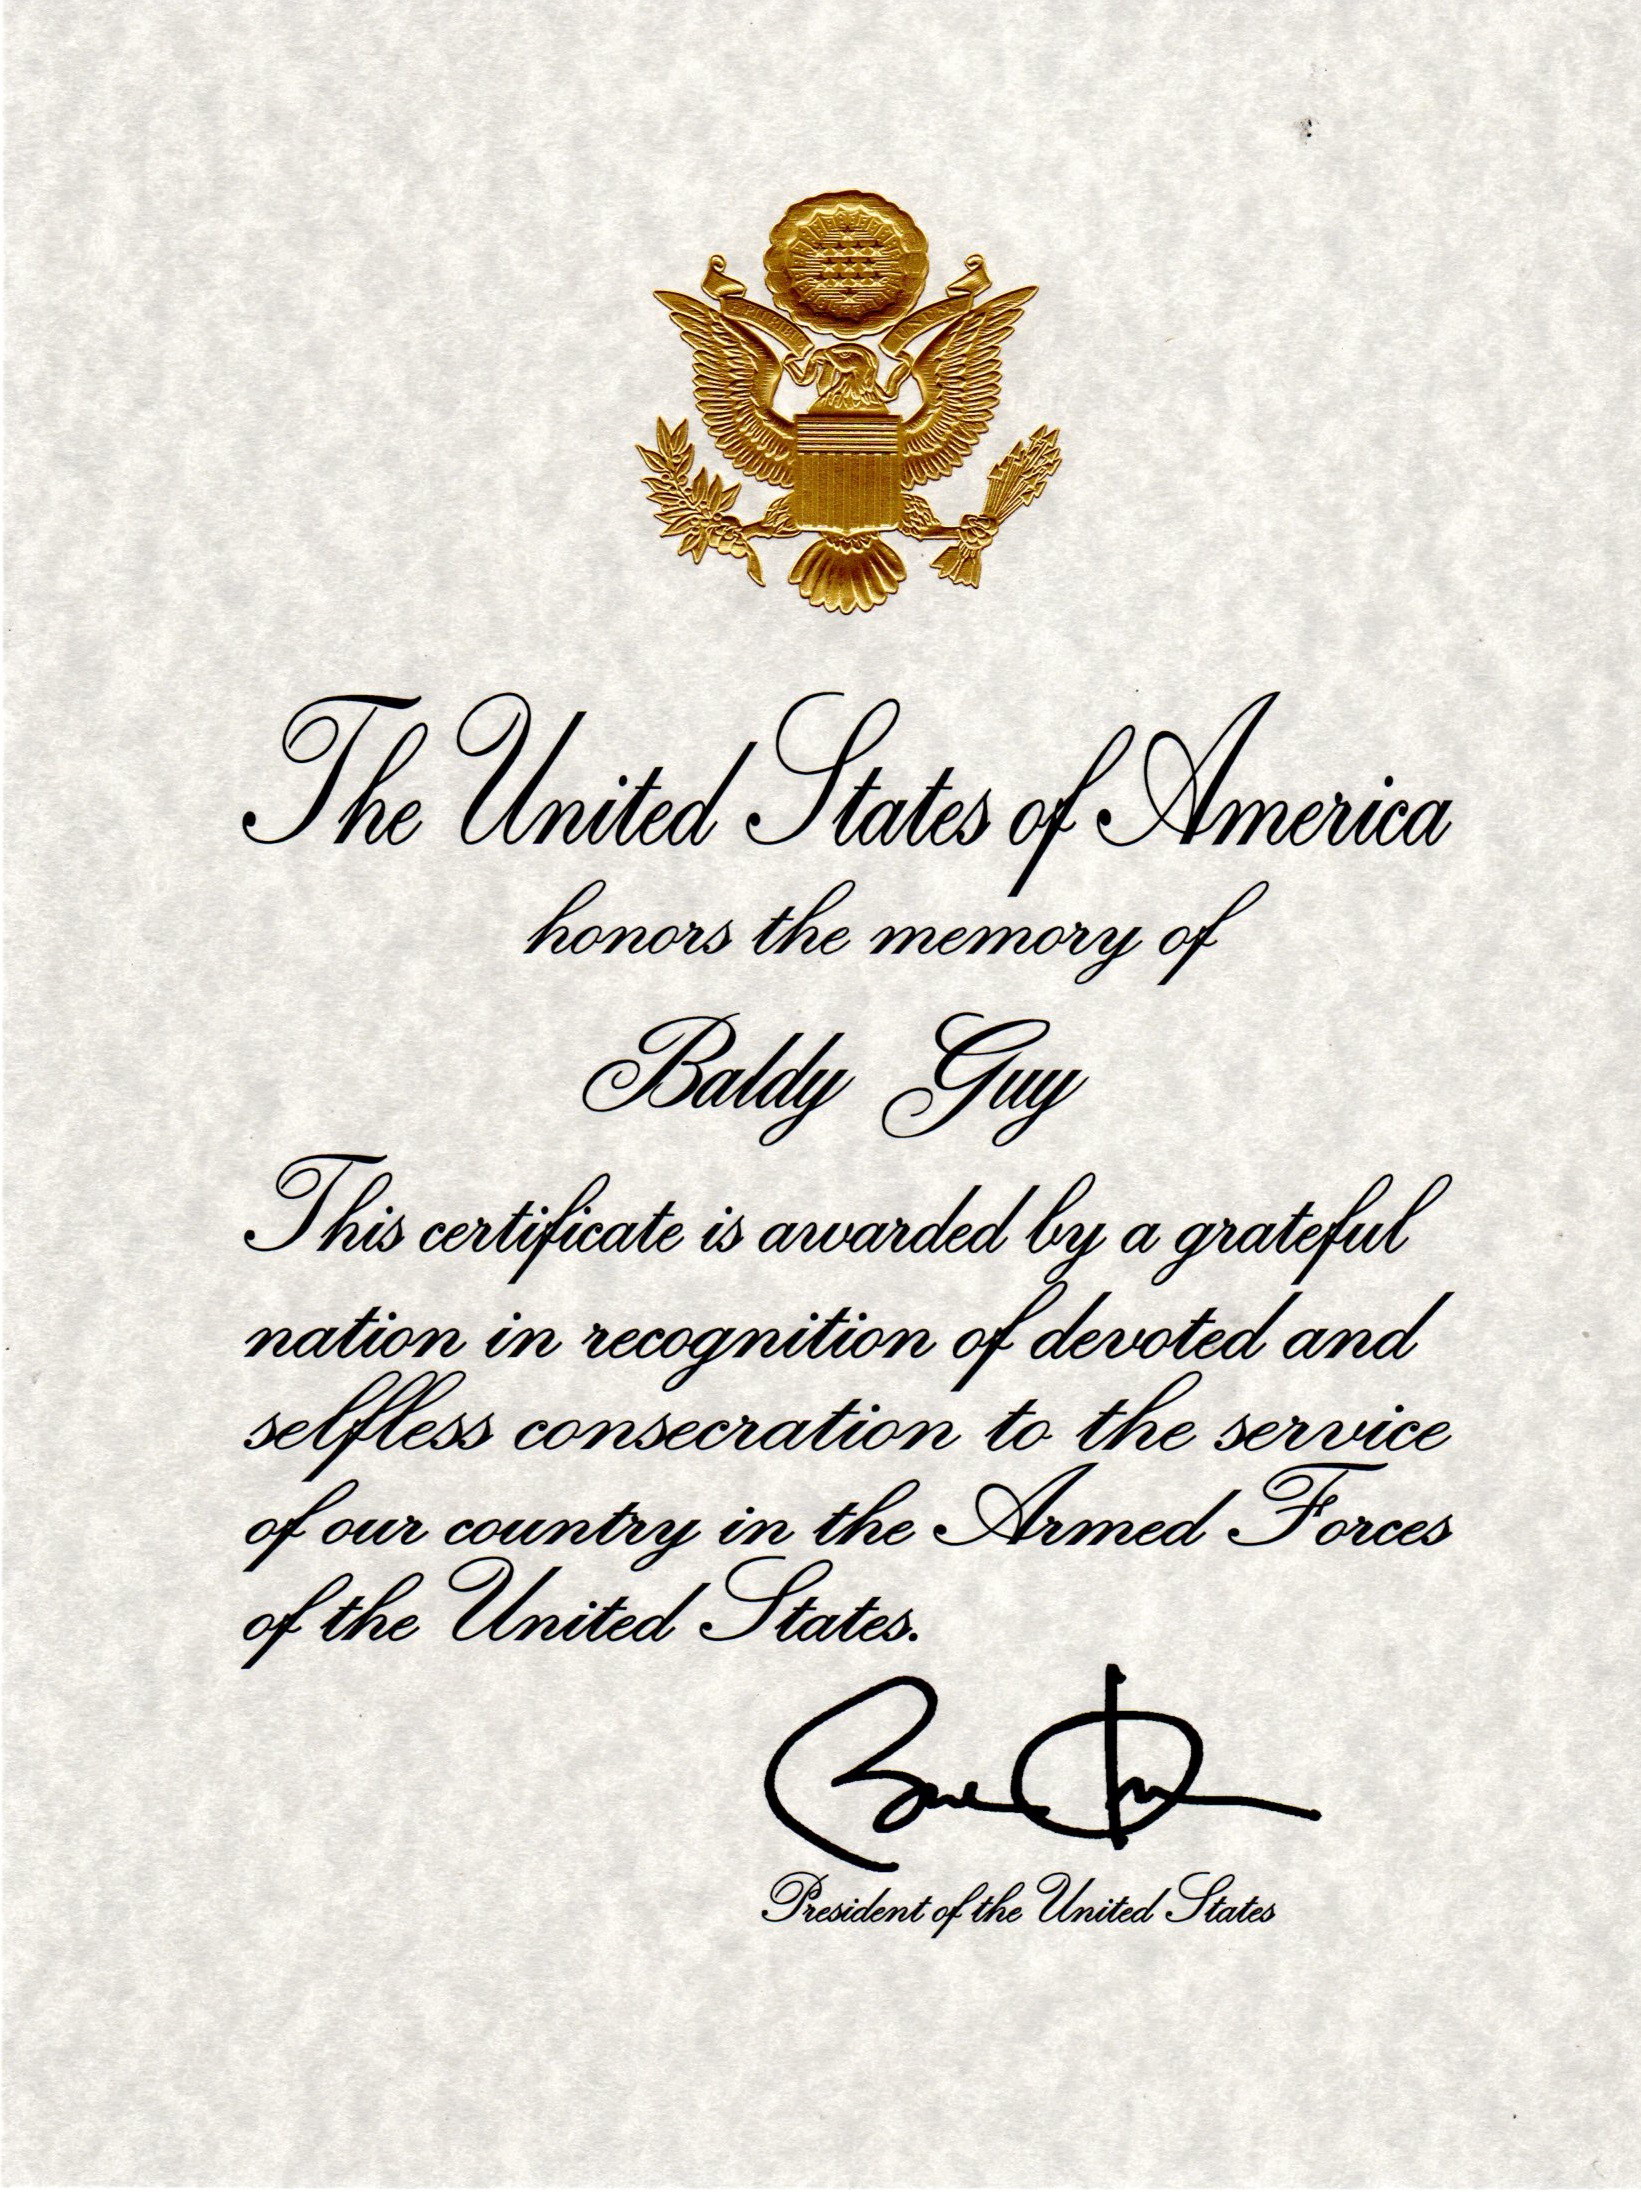 Baldy Guy - Presidential Memorial Certificate